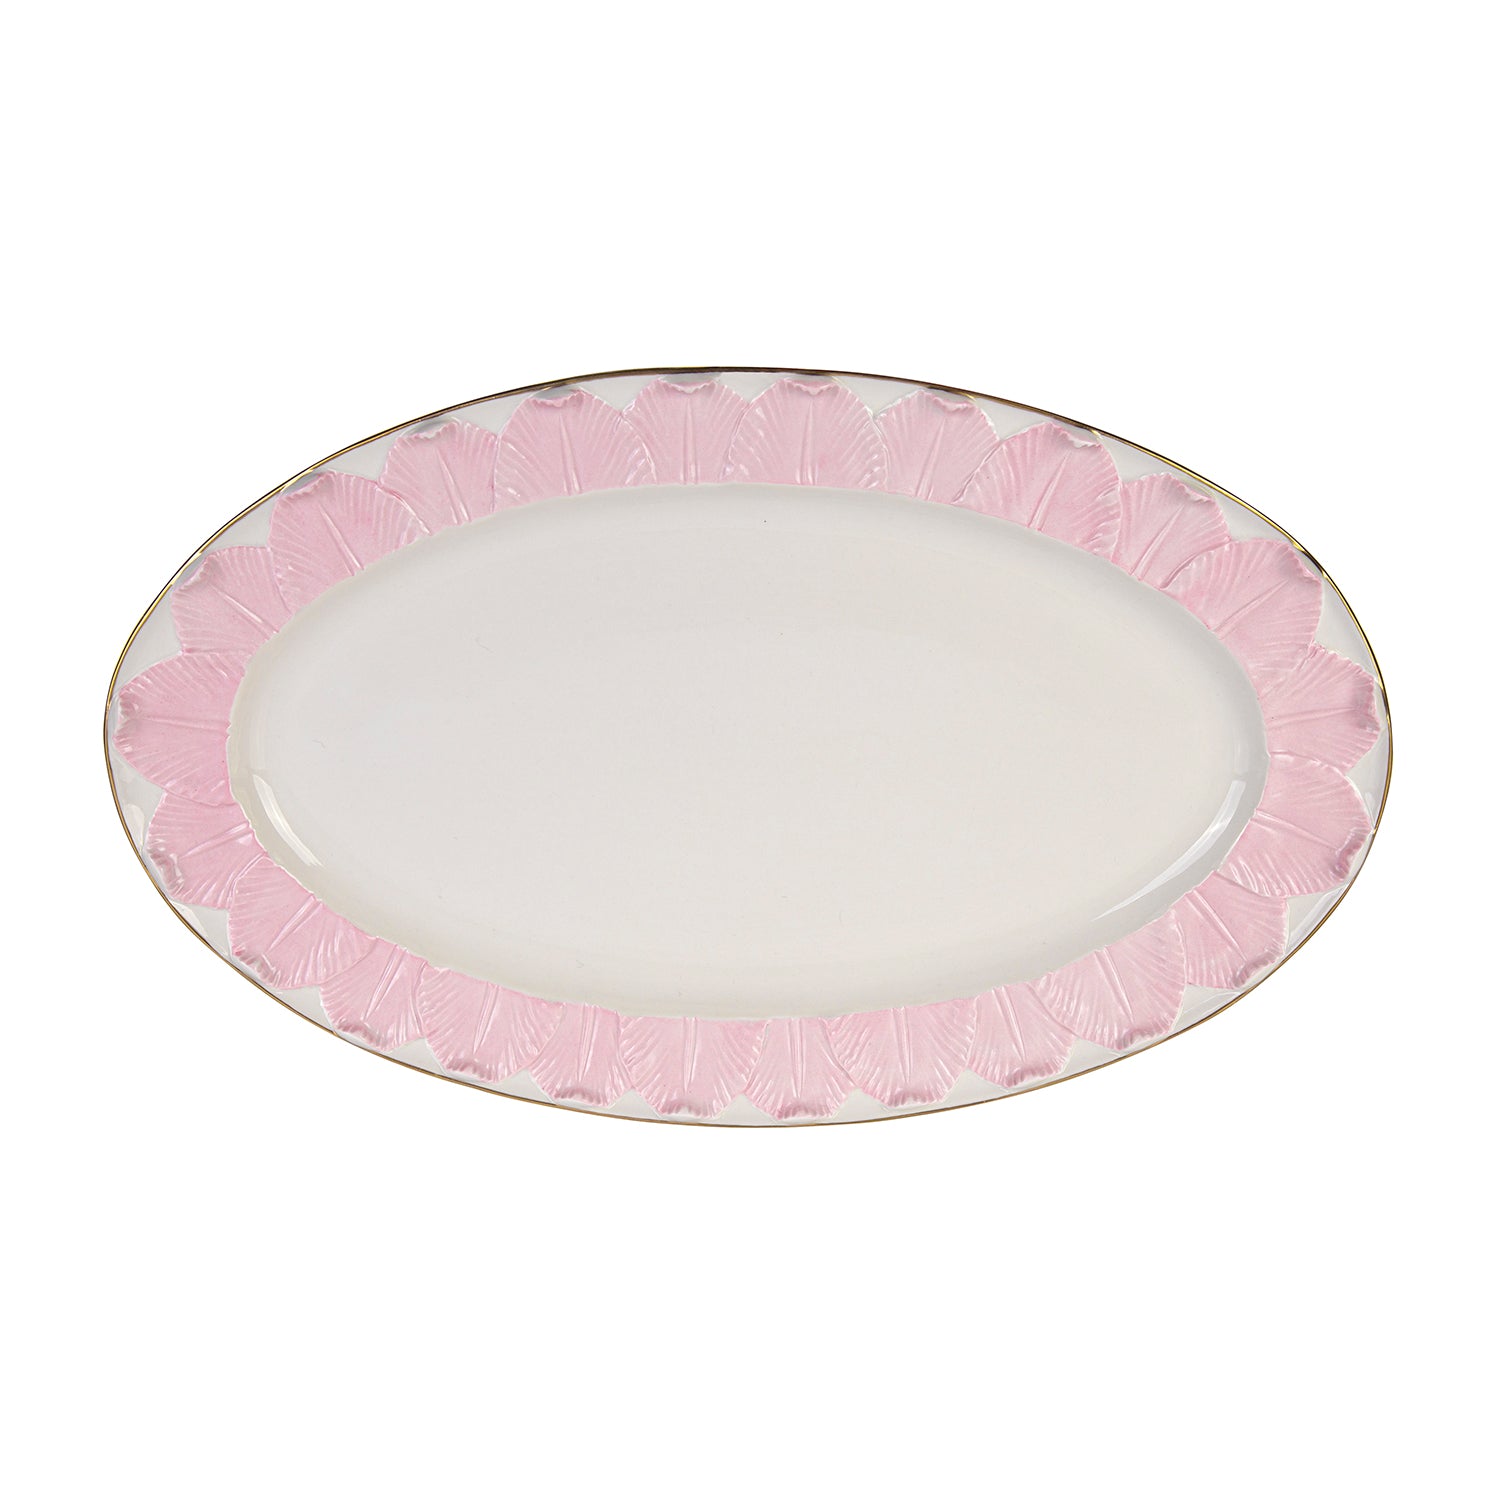 Tulip Oval Dish - Pink & White